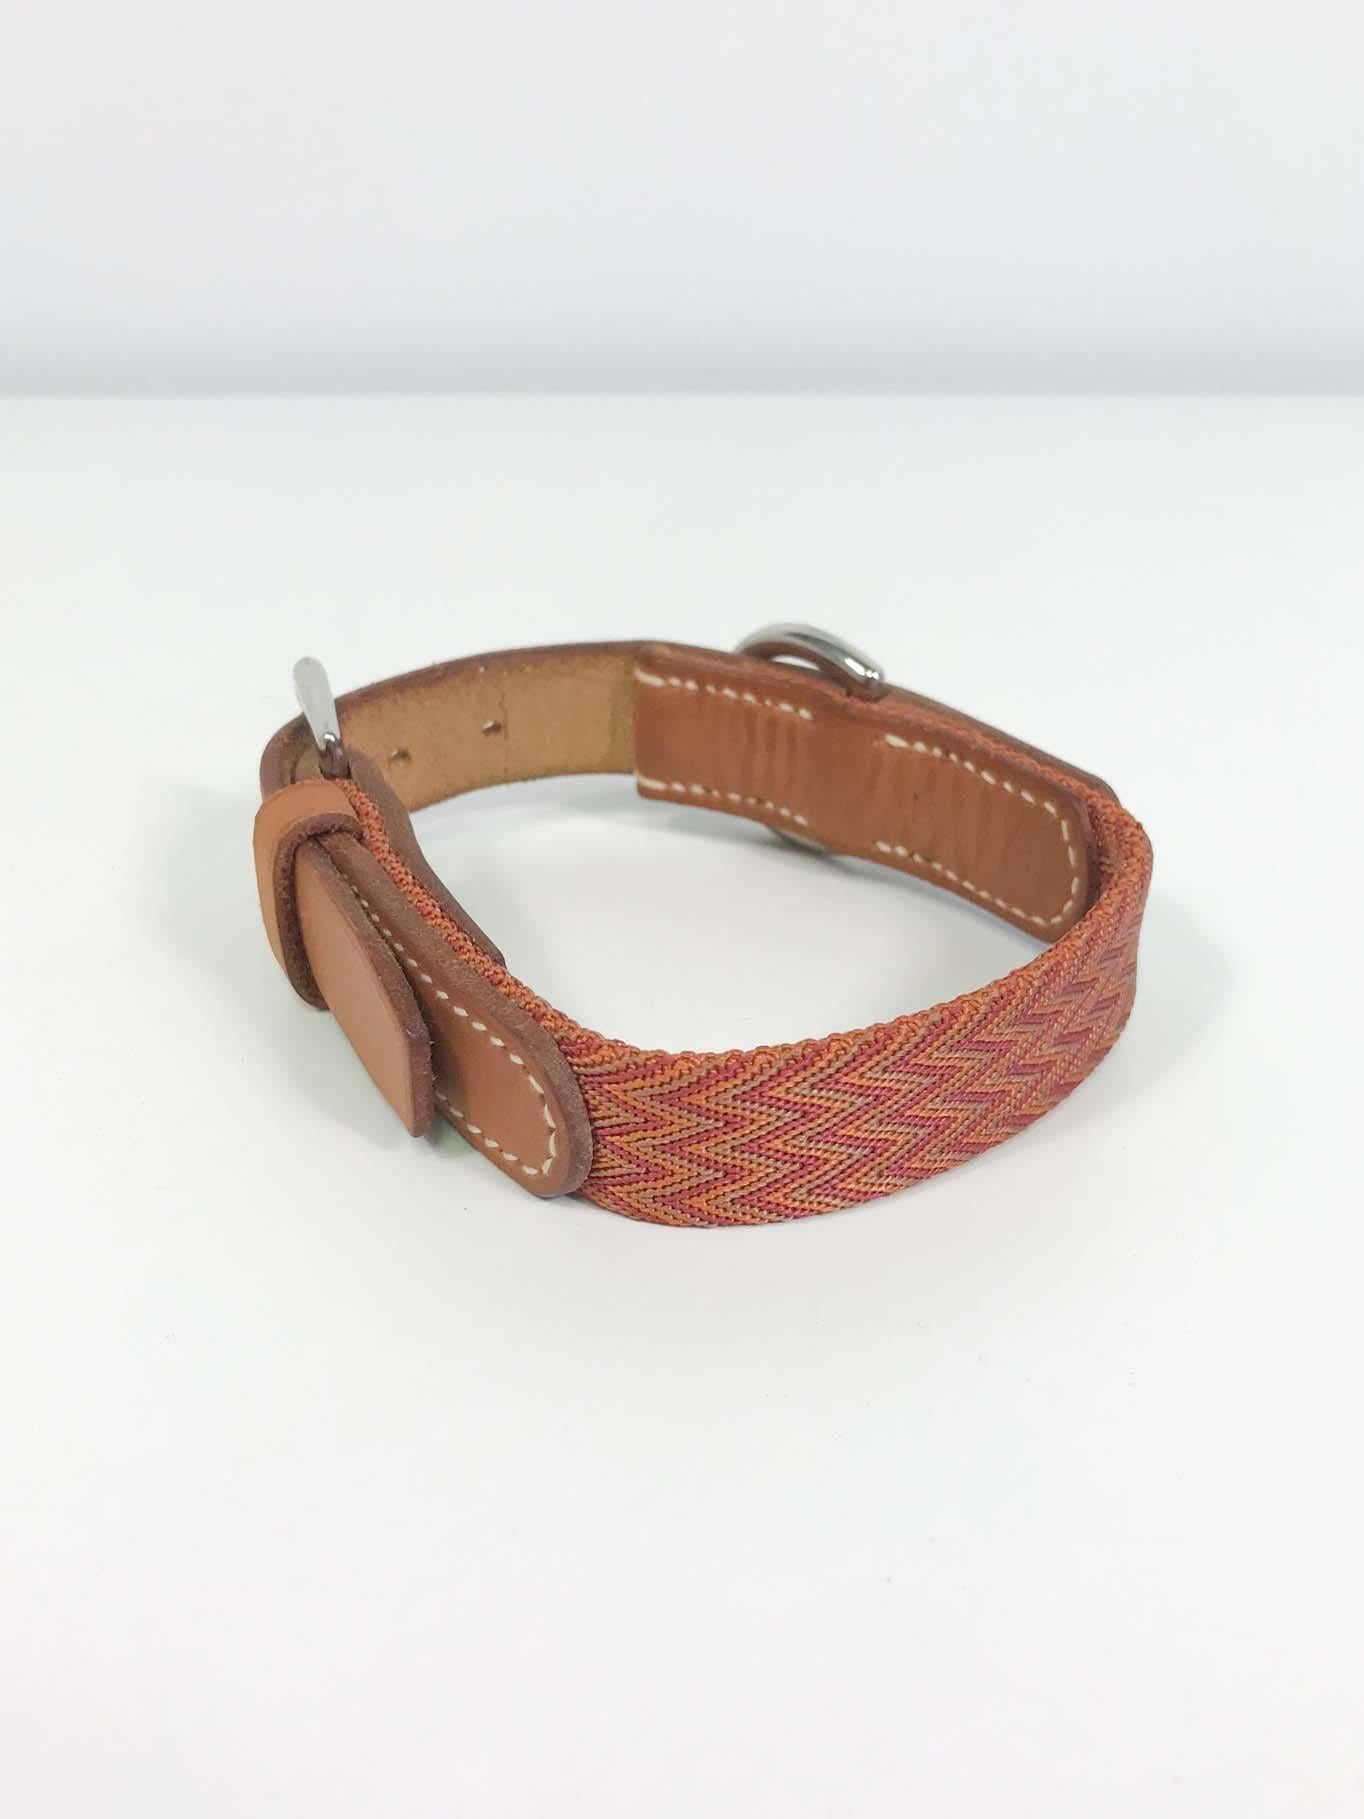 French Hermès Leather Dog Collar